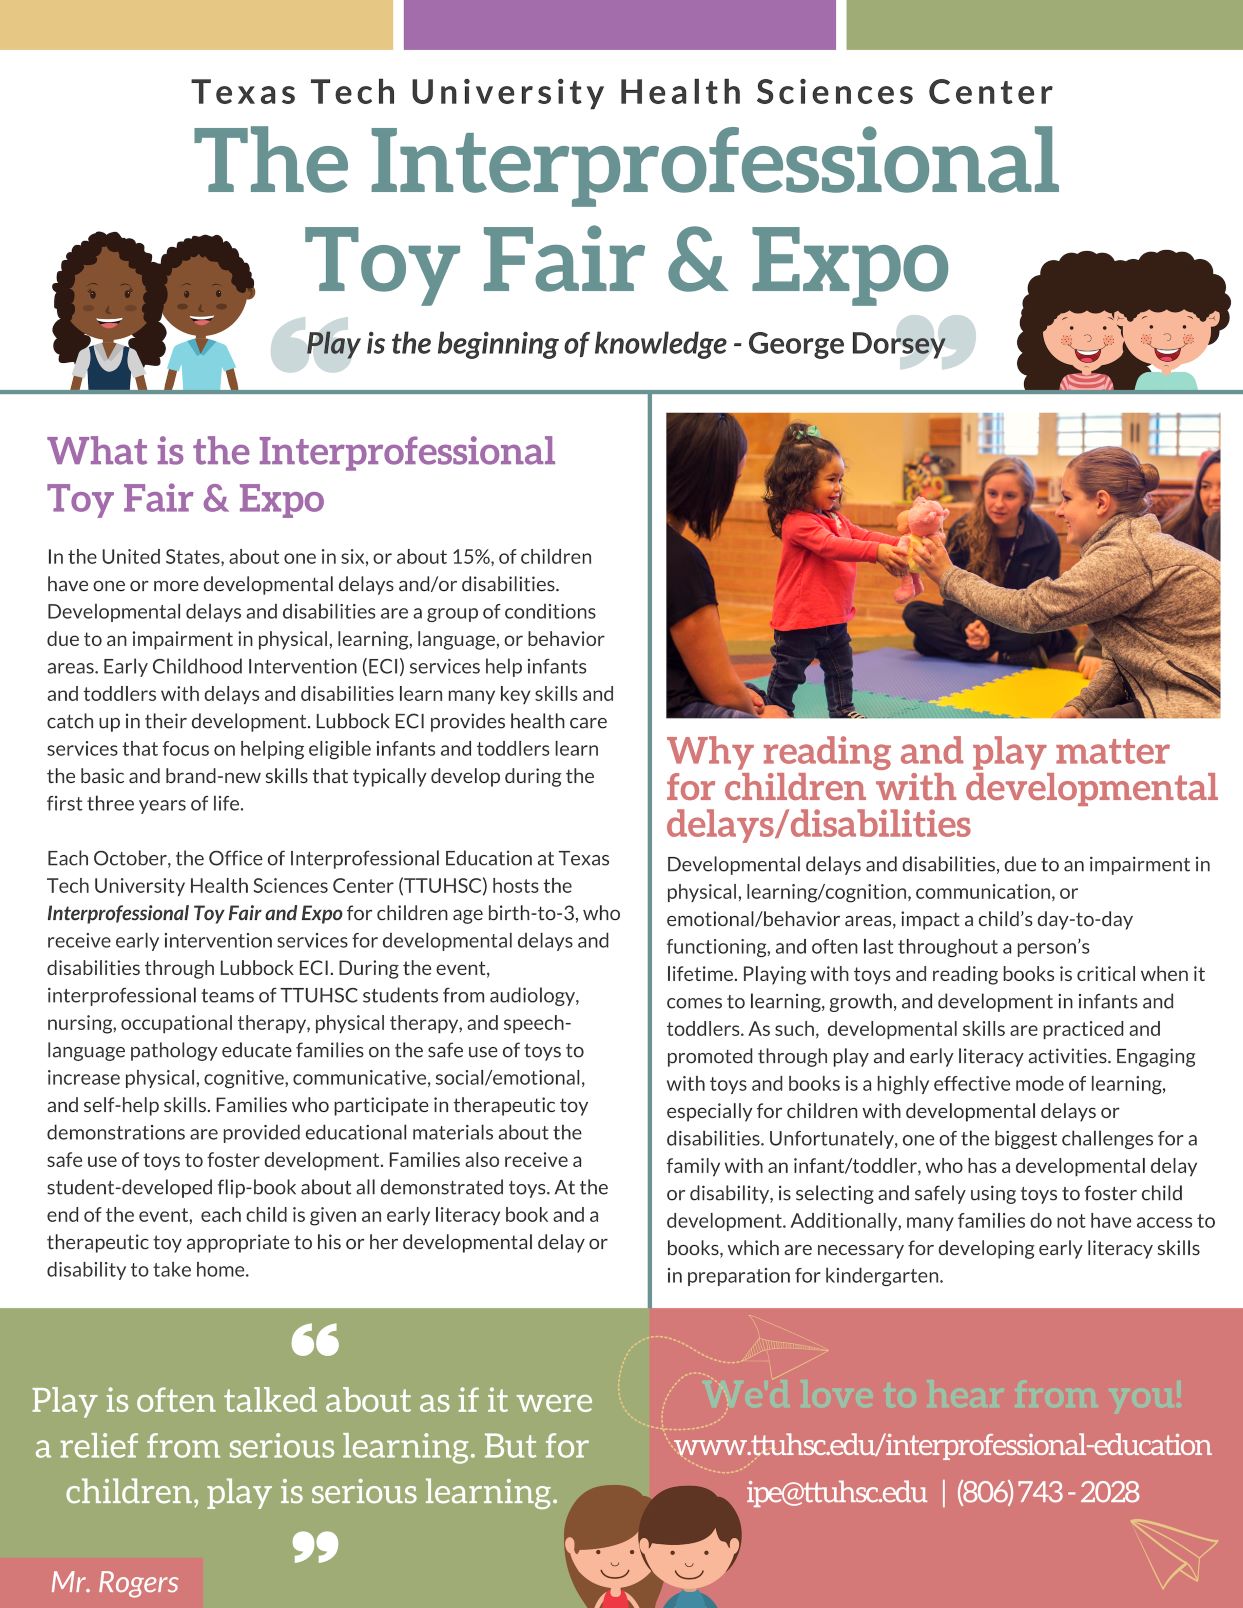 TTUHSC Interprofessional Toy Fair and Expo